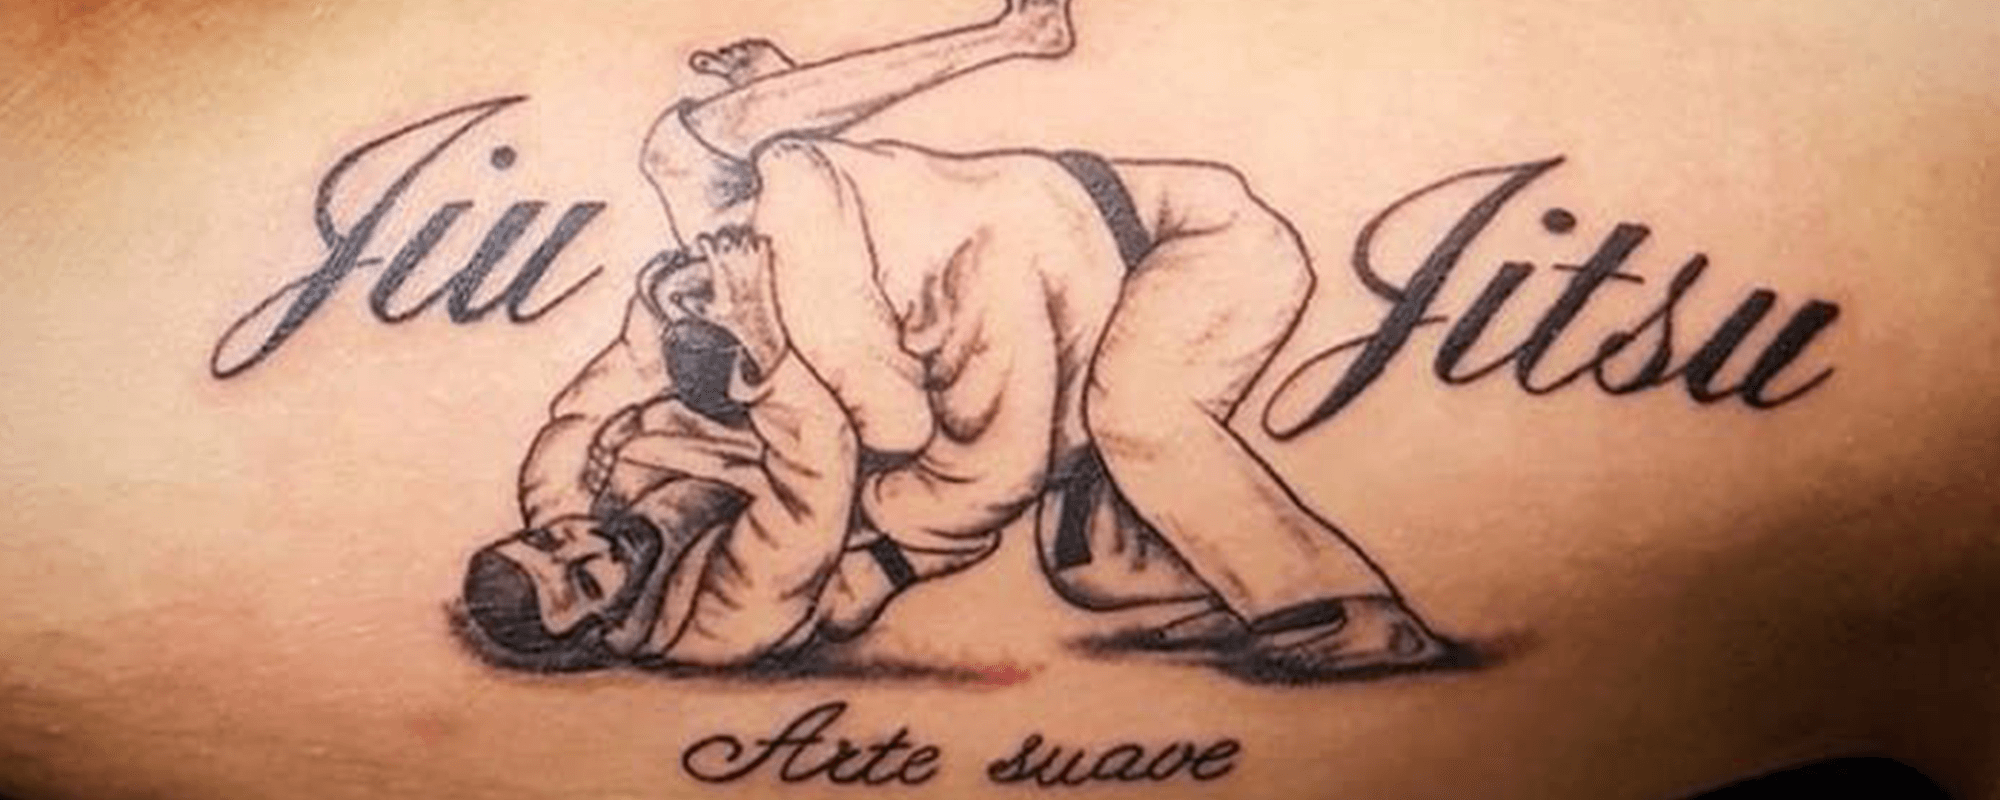 The Ultimate Brazilian Jiu-Jitsu Tattoo Collection